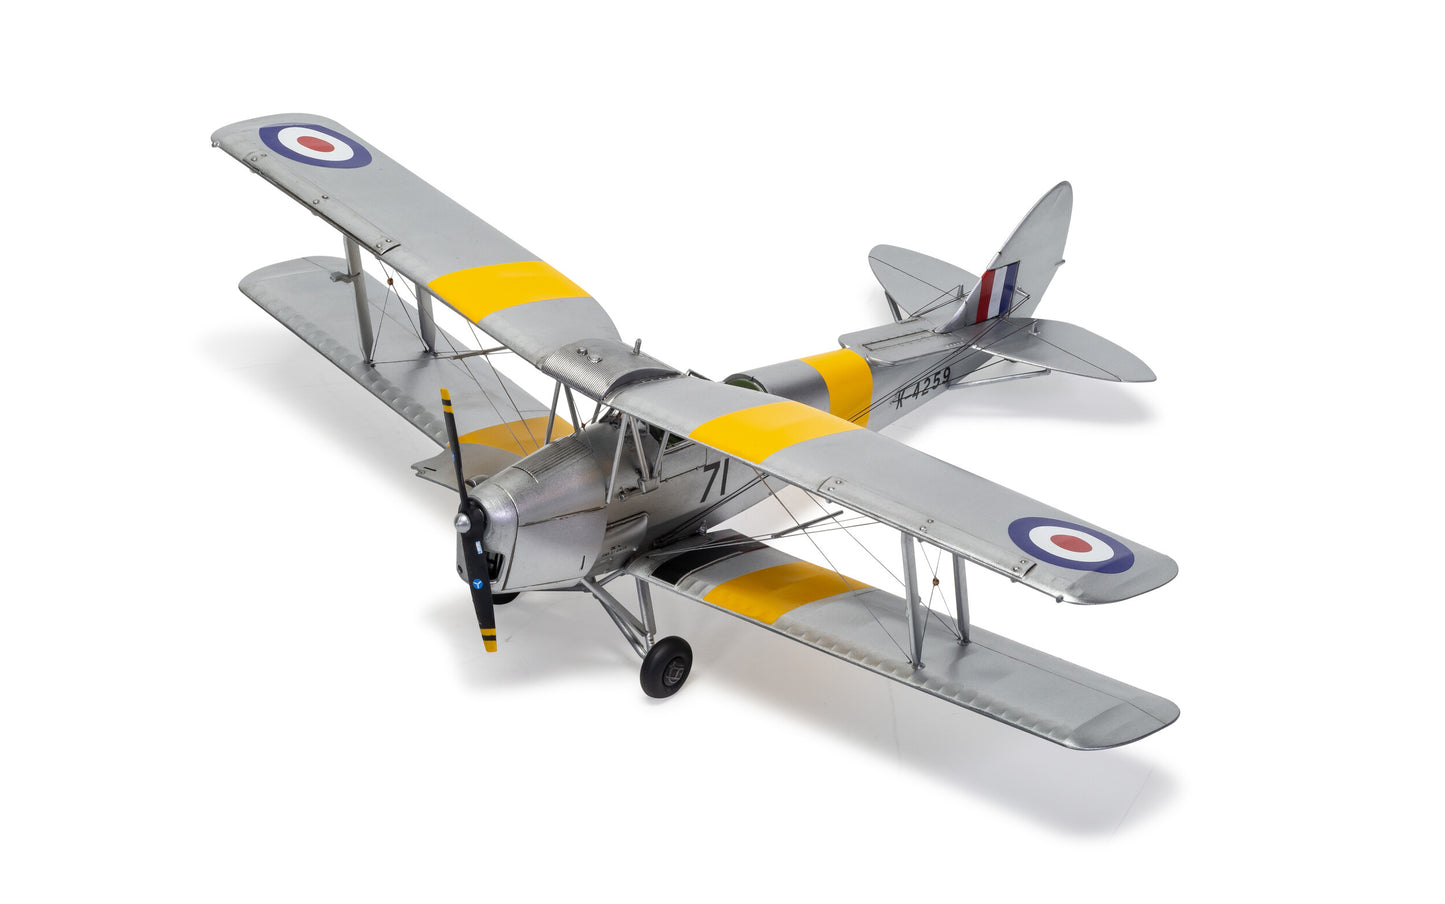 Airfix 1/48th scale de Havilland D.H.82a Tiger Moth